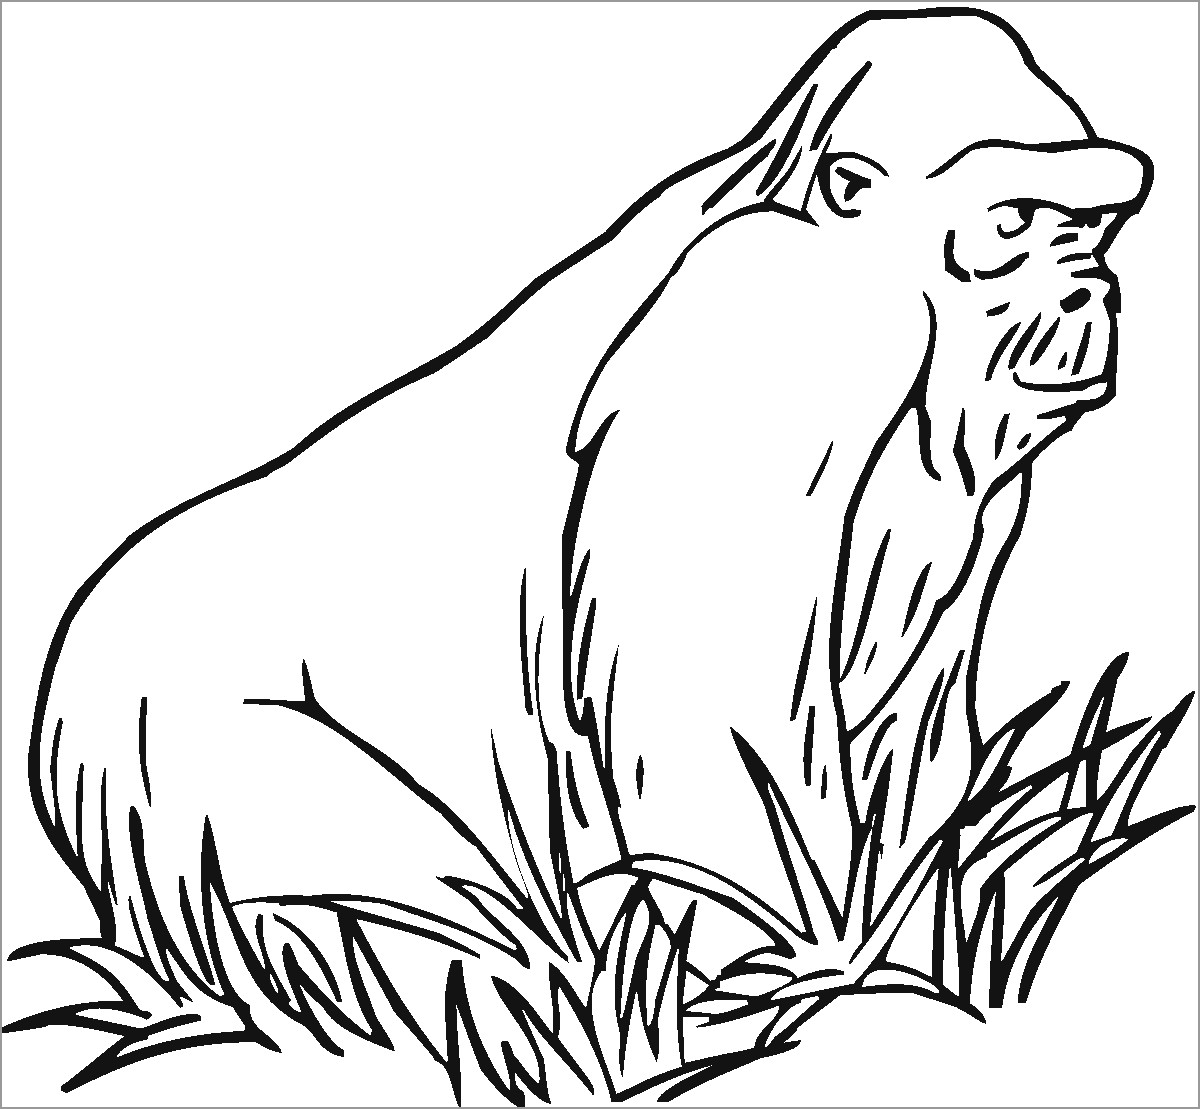 Orangutan Coloring Page to Print